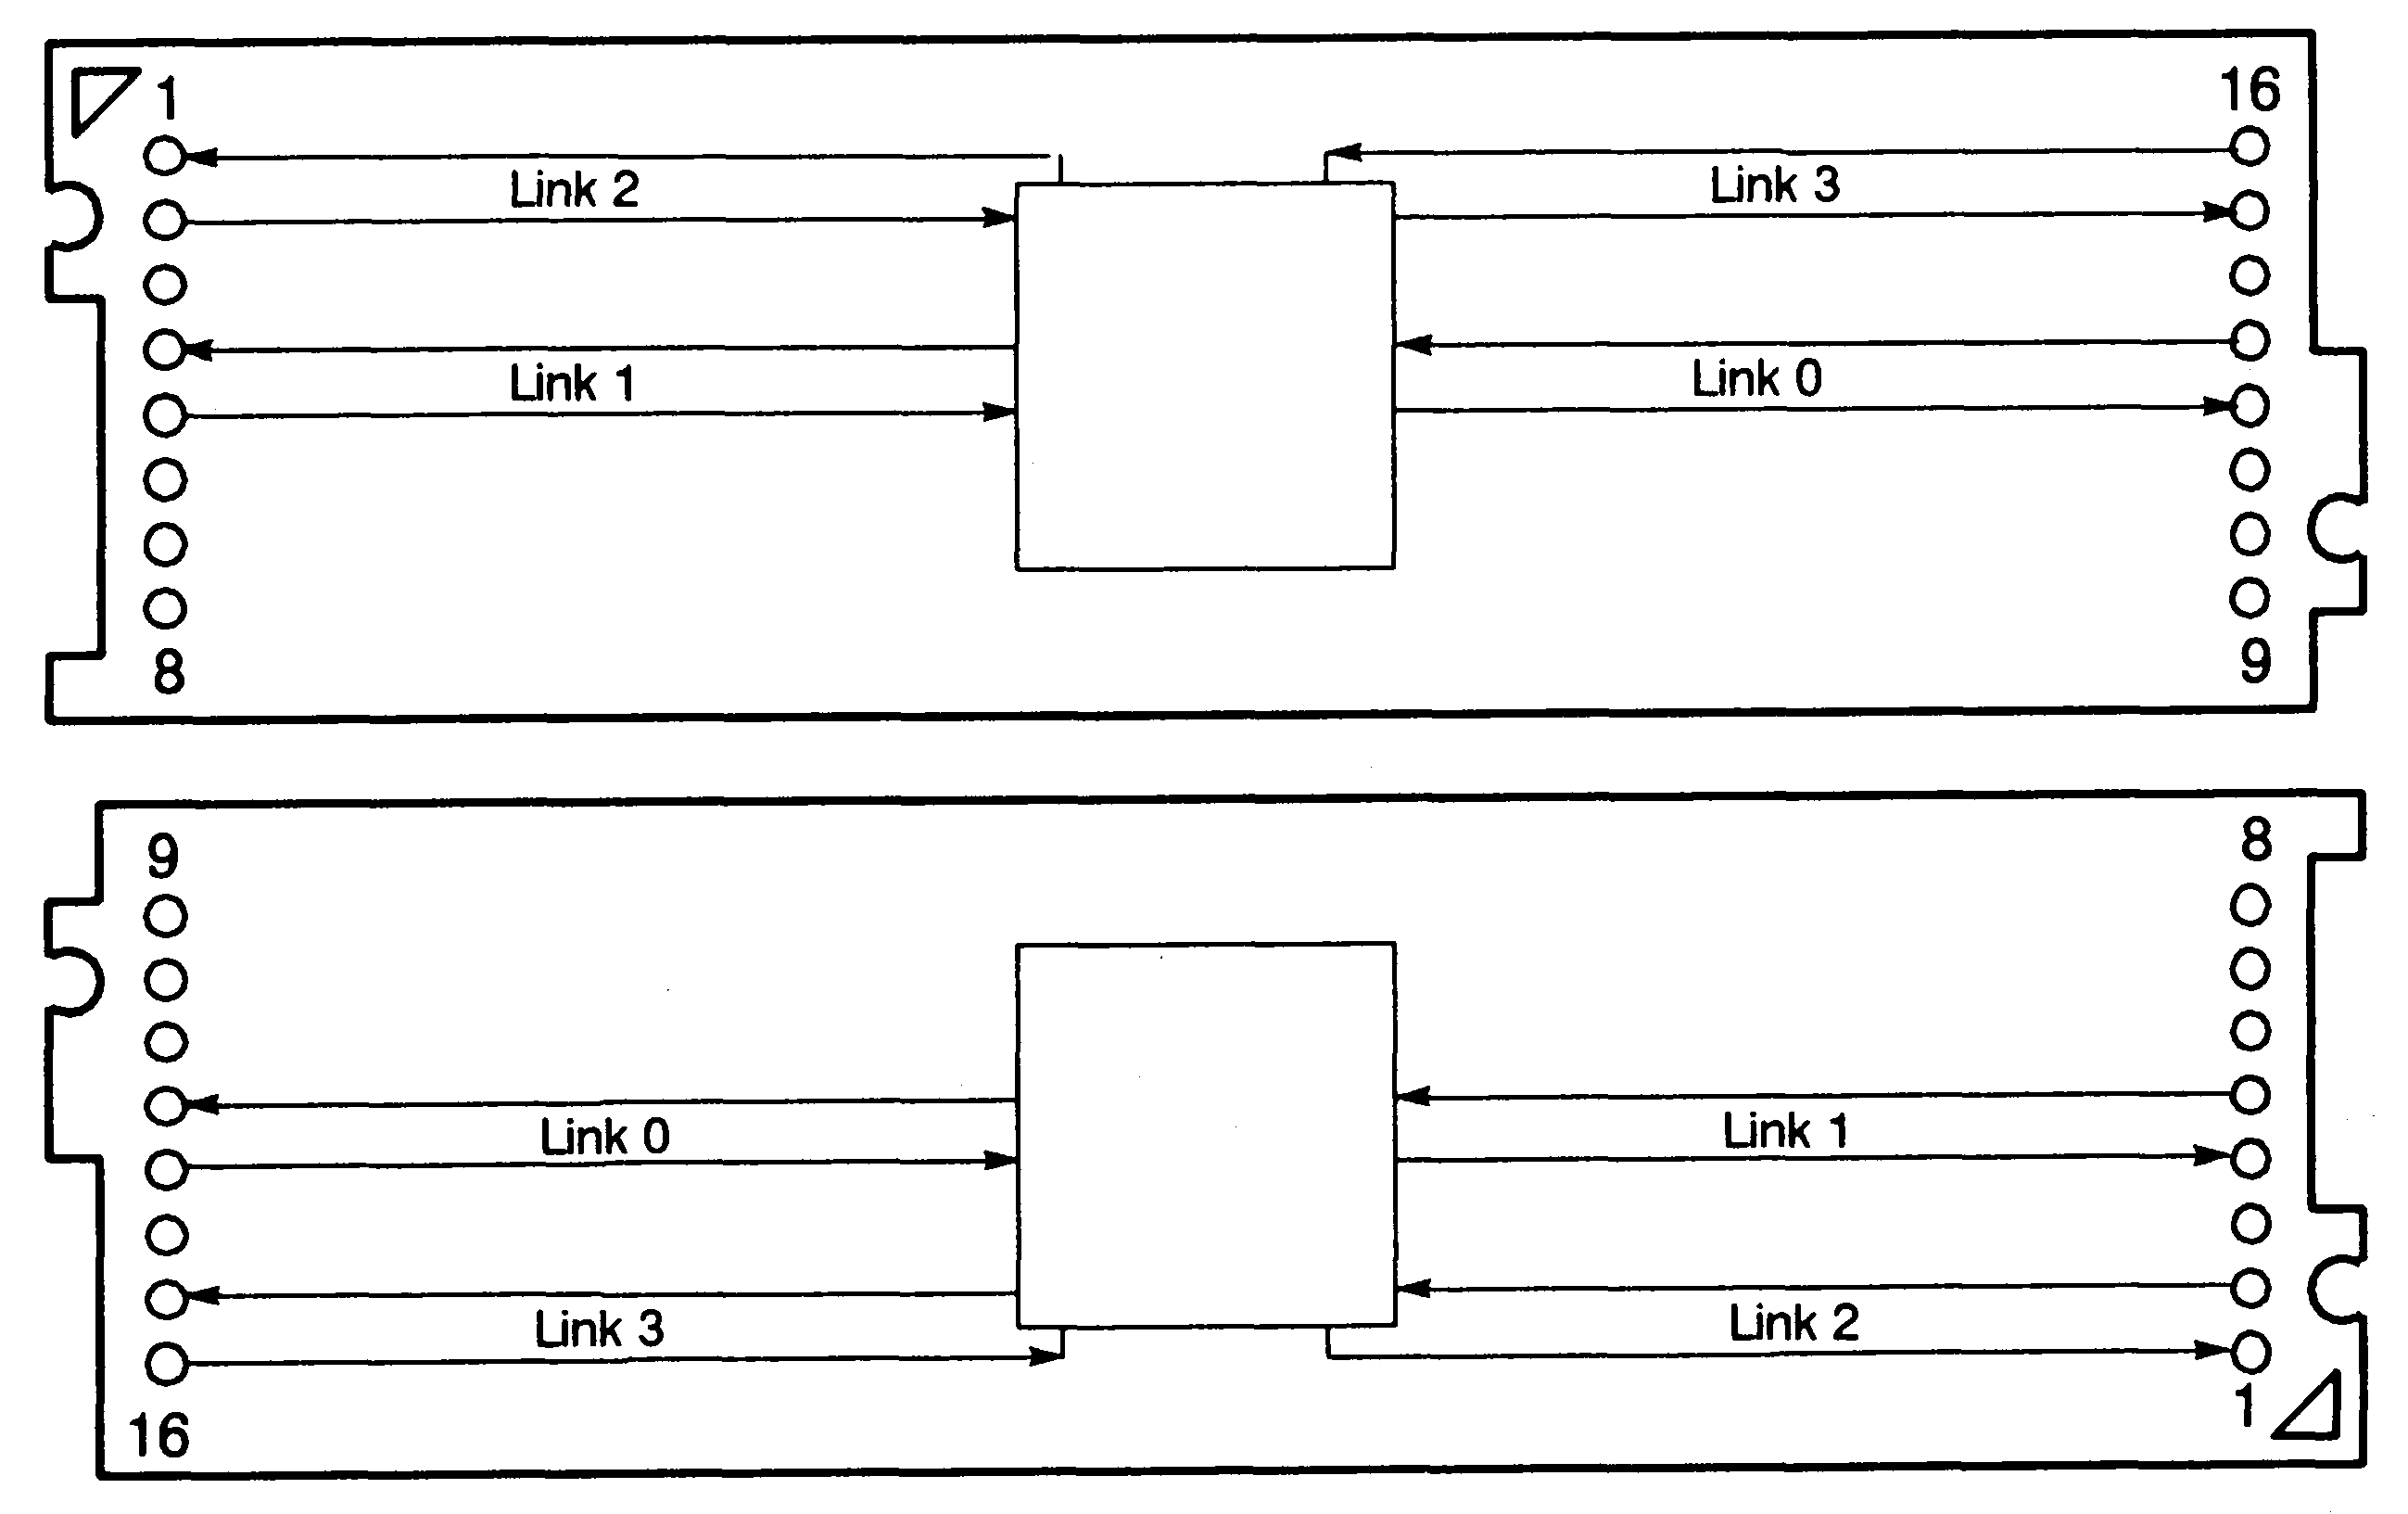 Orientation of adjacent Size1
modules